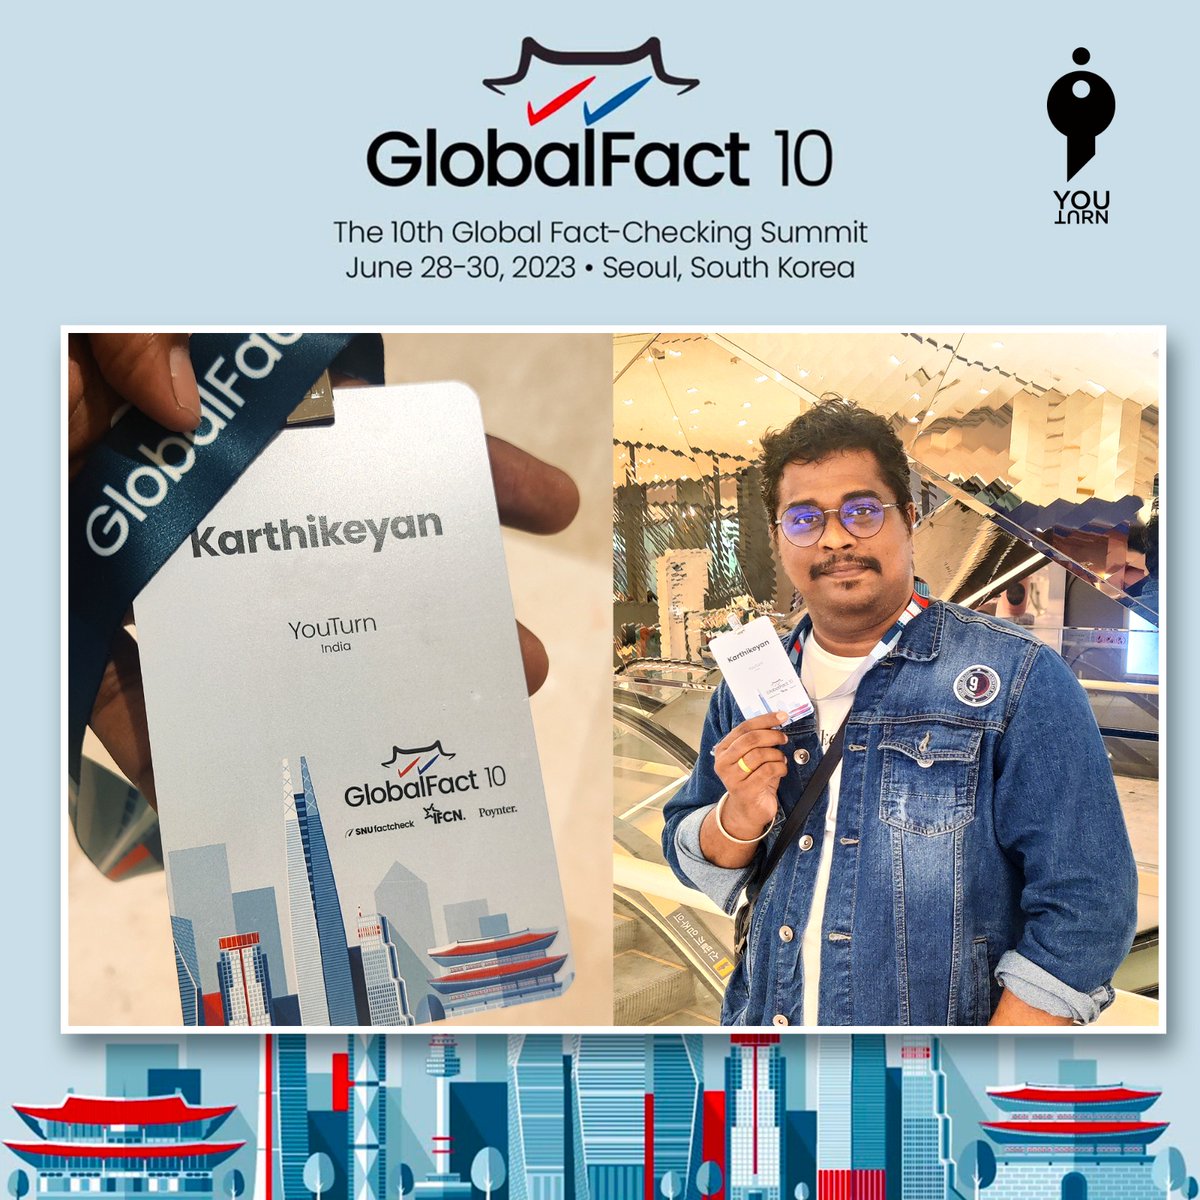 Global fact 10 @ Seoul , South Korea

#GlobalFact10